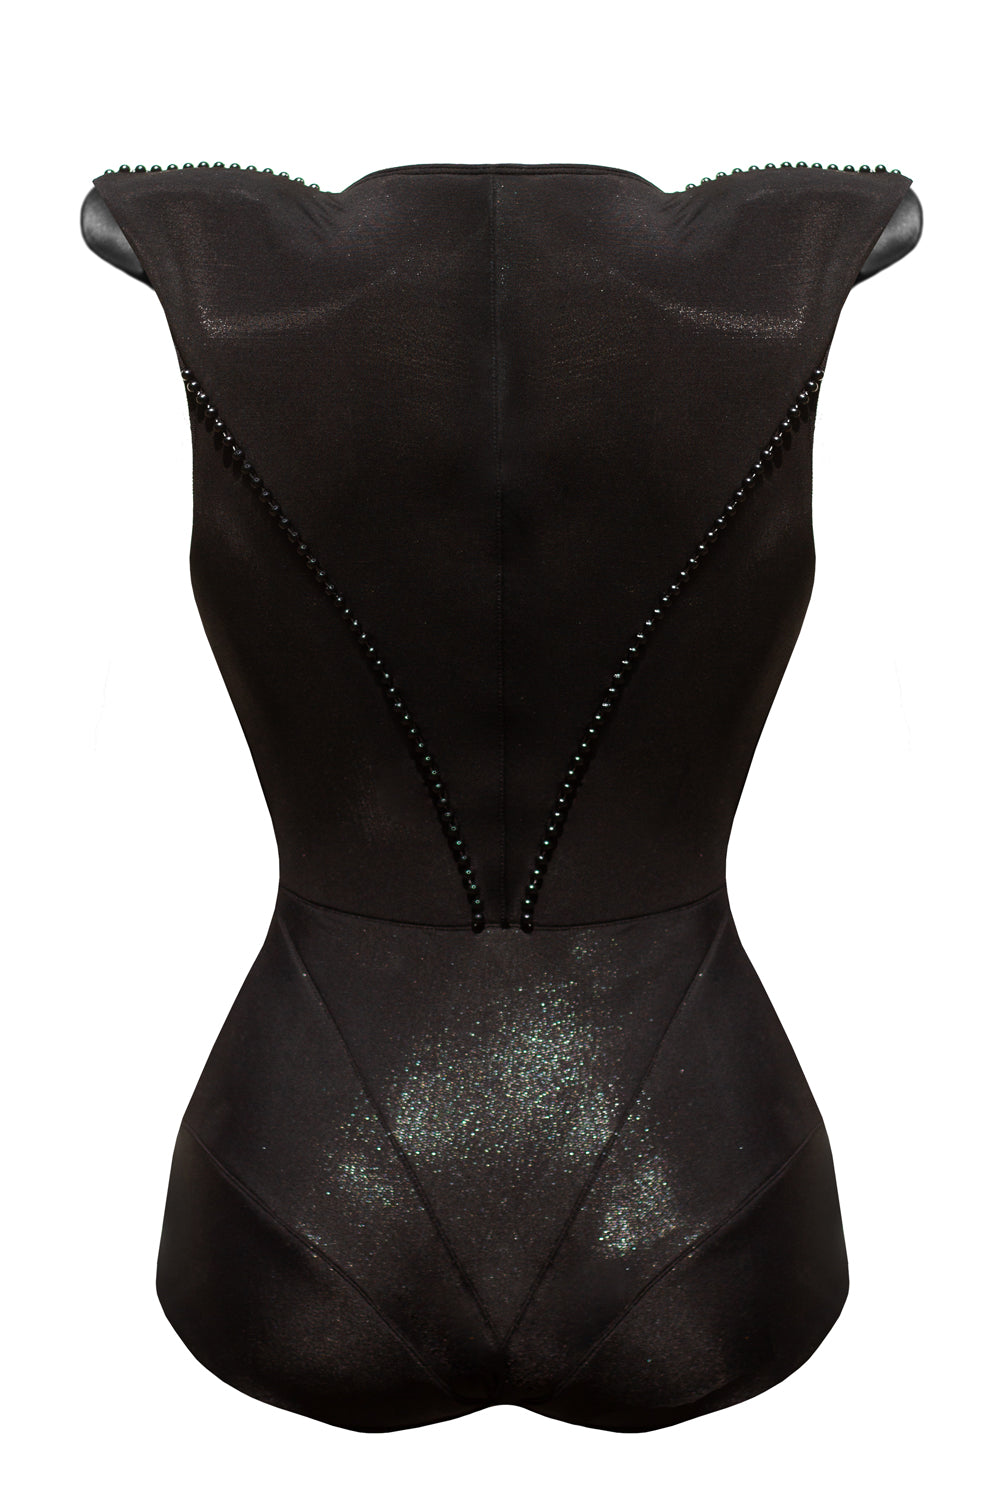 Black Swan bodysuit - bodysuit by Keosme. Shop on yesUndress